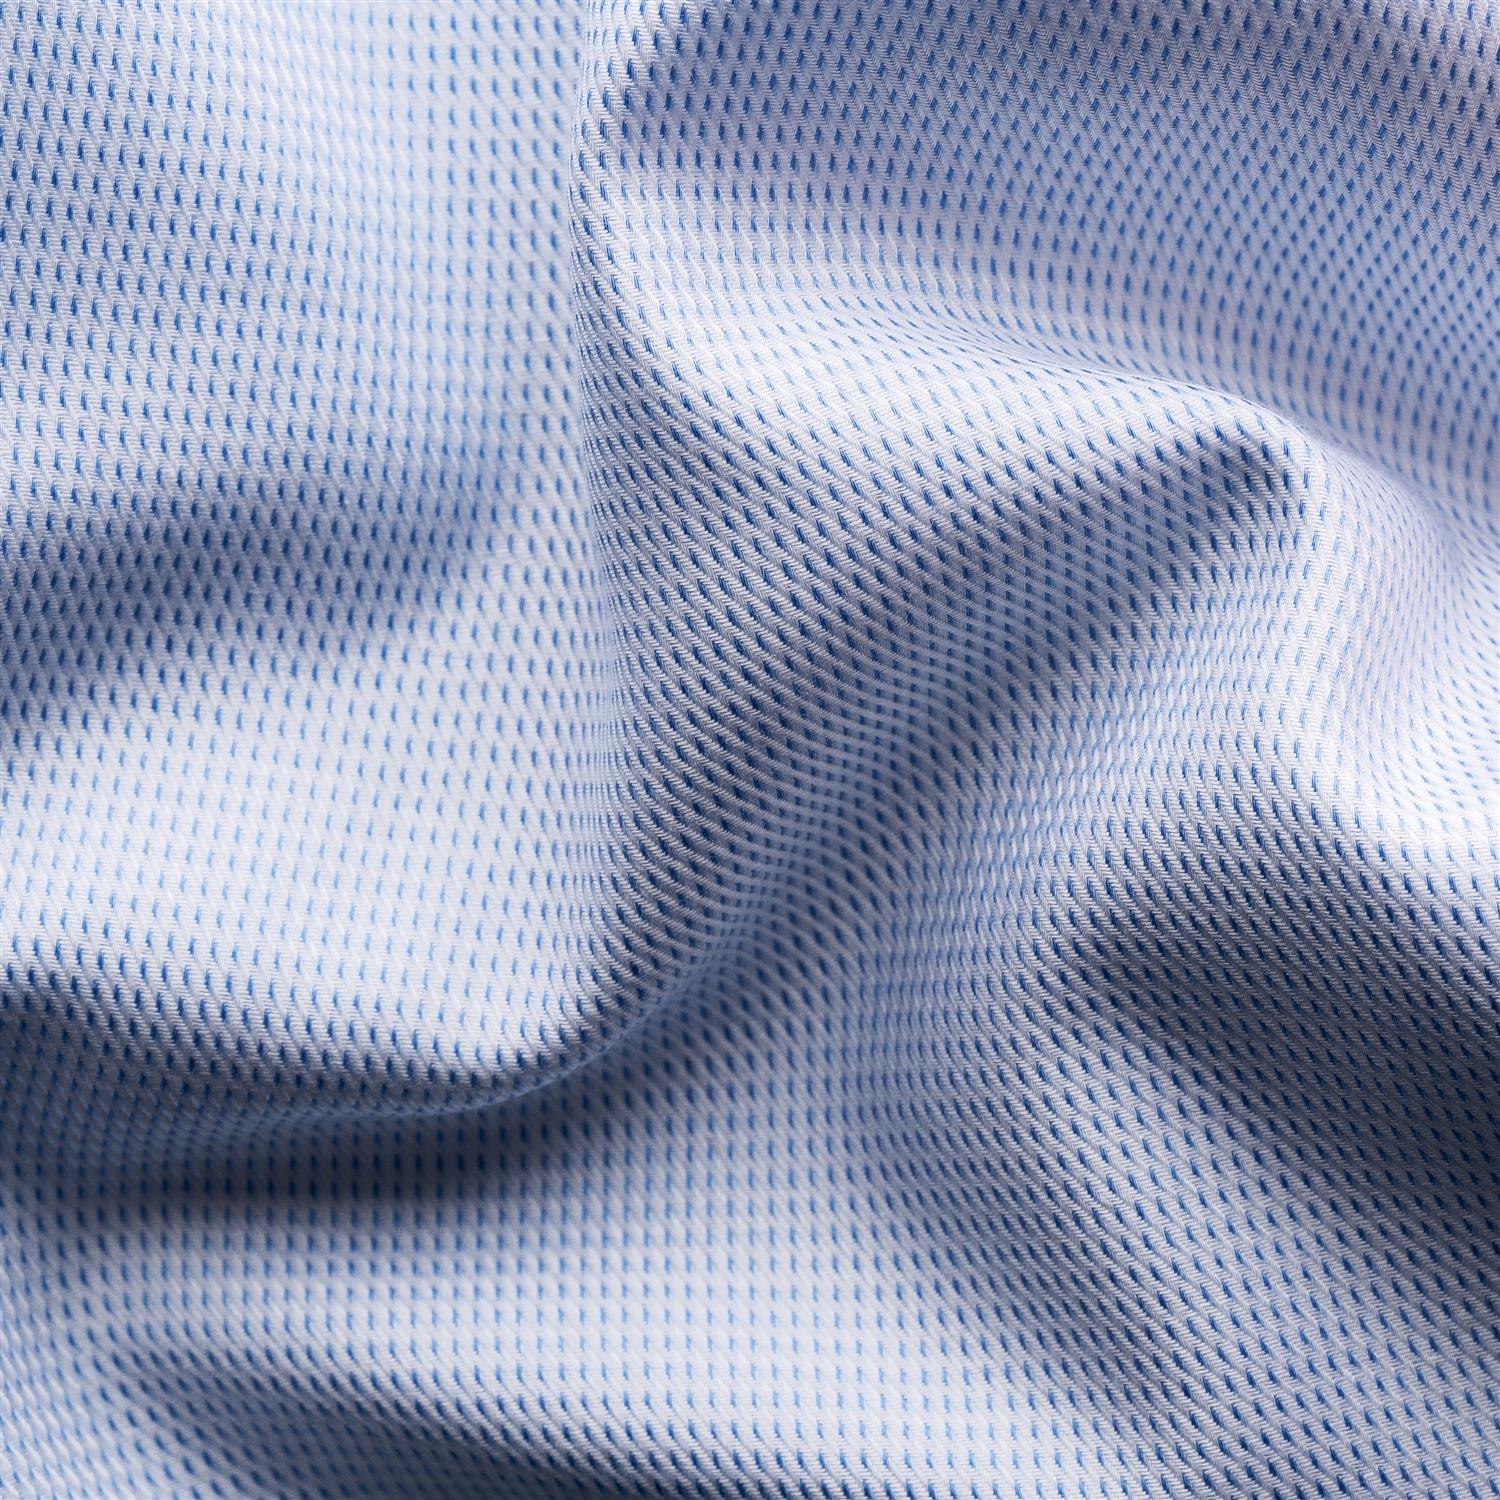 Eton Light Blue Fine Twill Shirt Skjorte Lyseblå - modostore.no